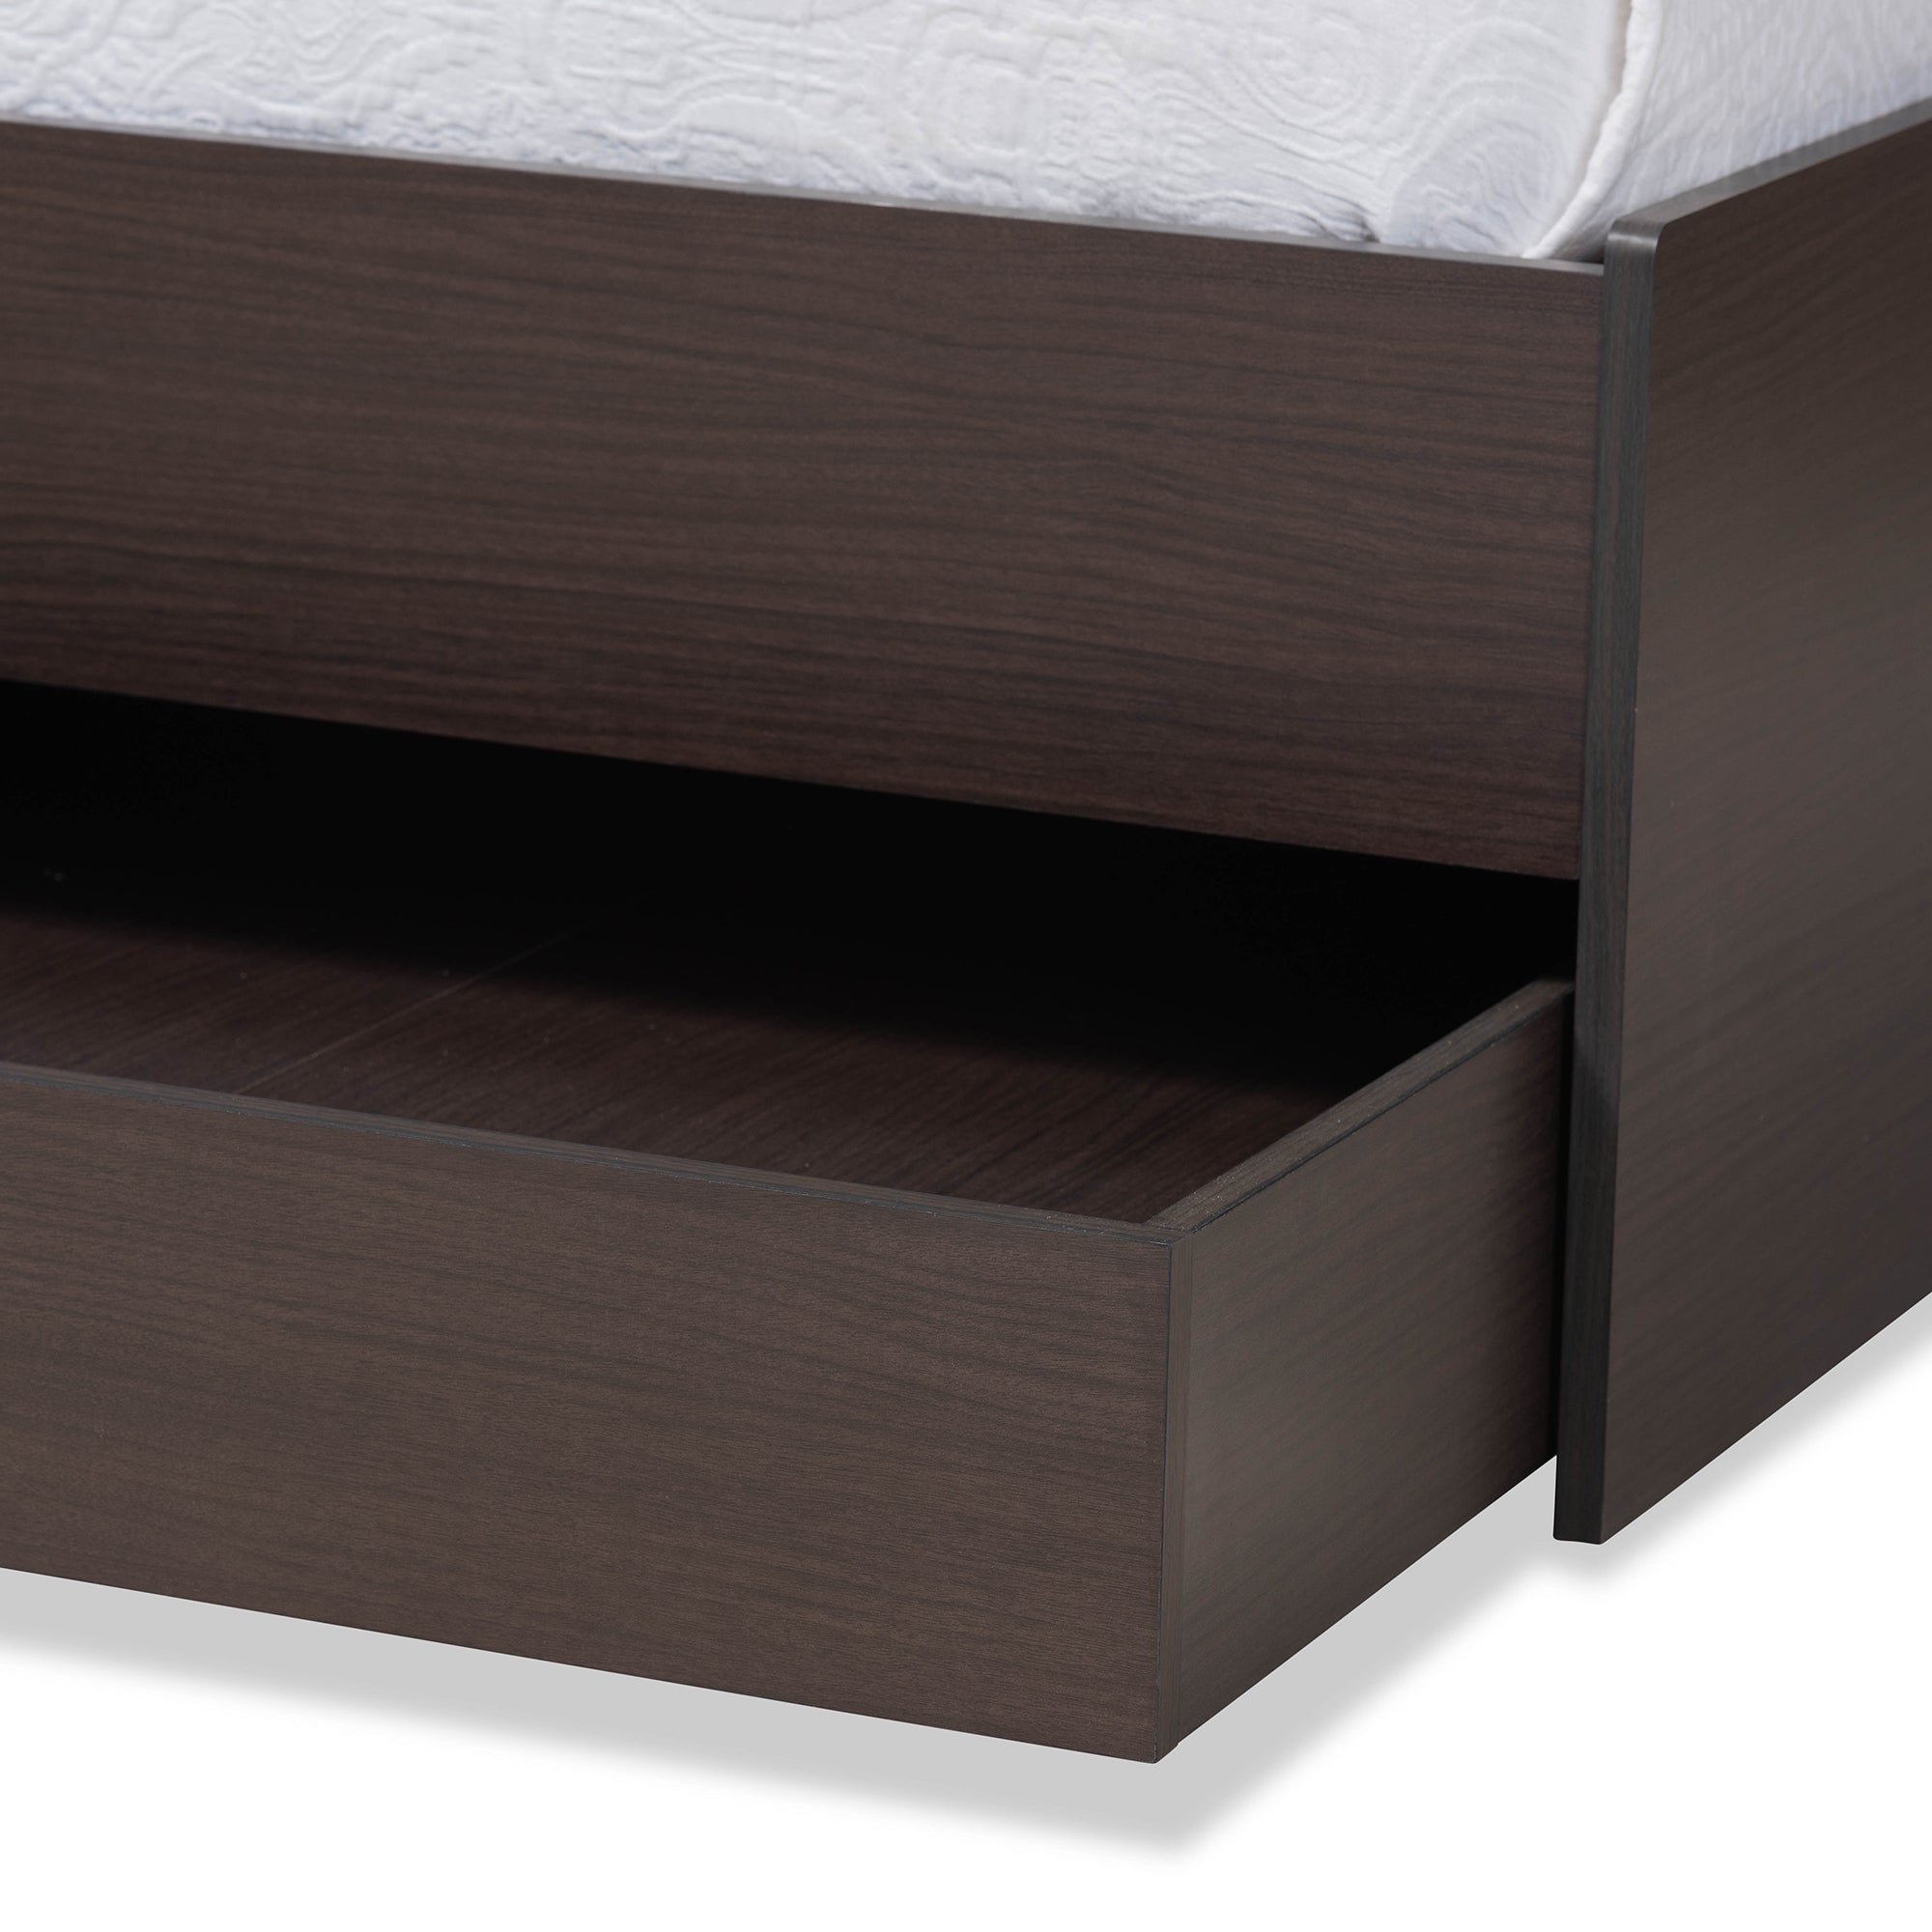 Faraday Modern Bed-Bed-Baxton Studio - WI-Wall2Wall Furnishings